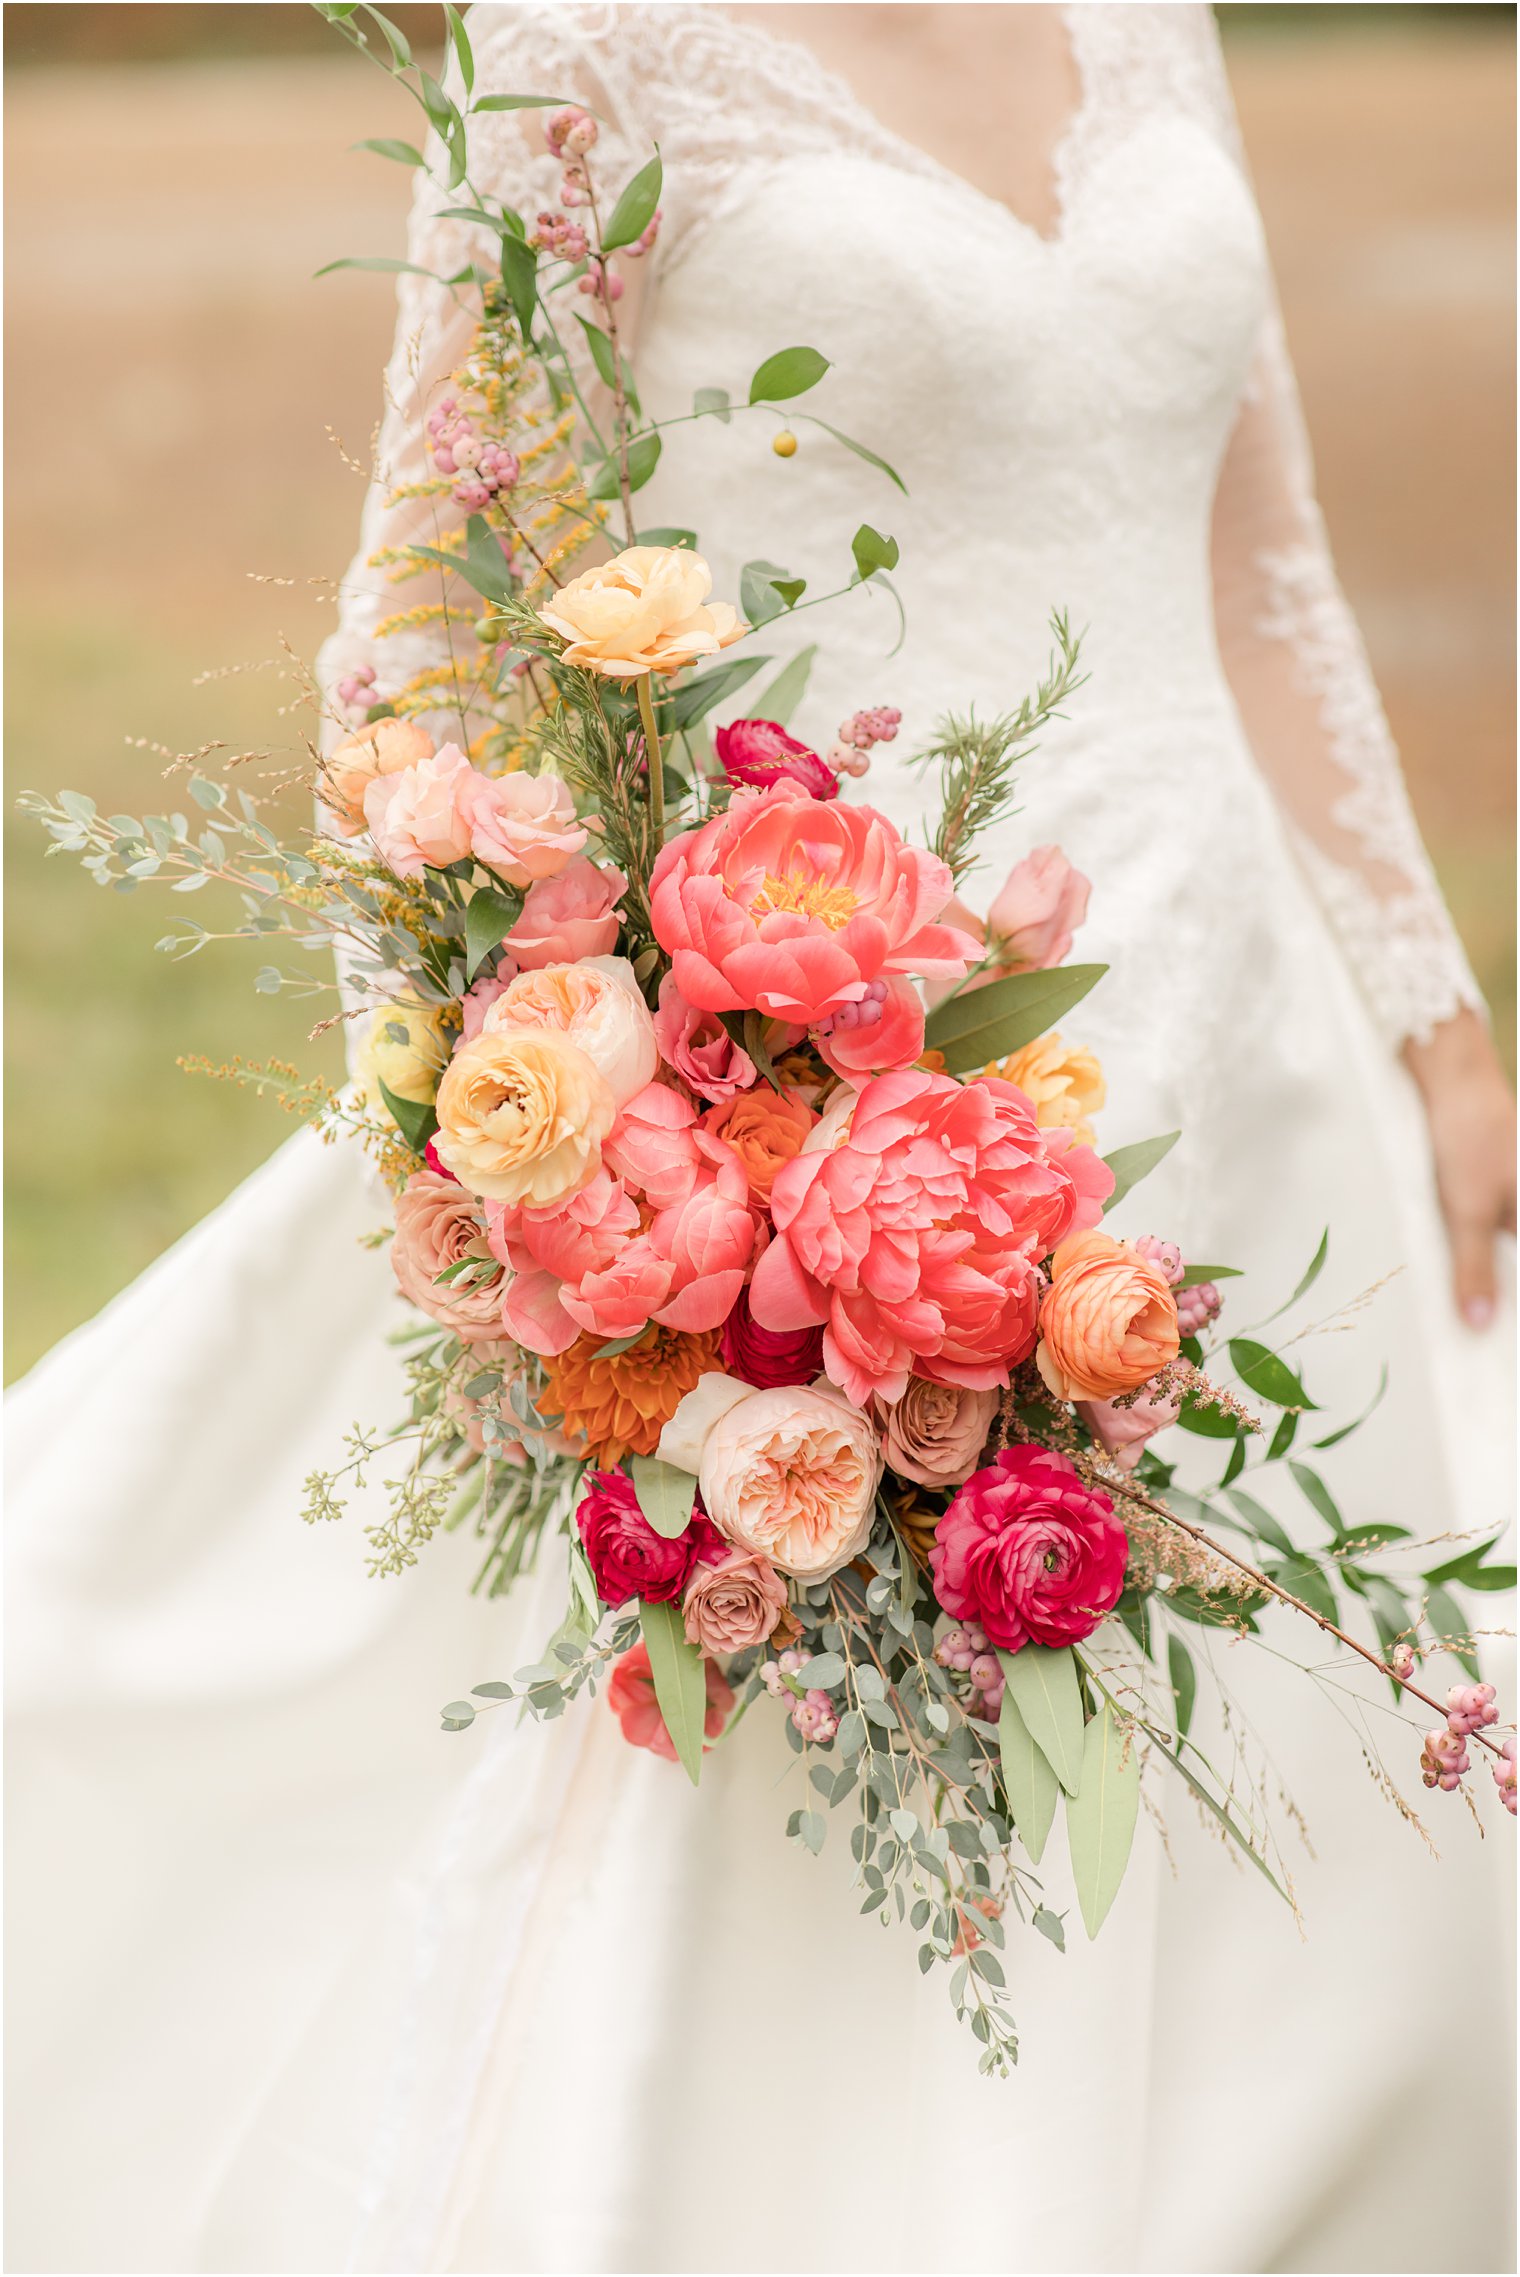 Wedding bouquet by Designs by Magnolia